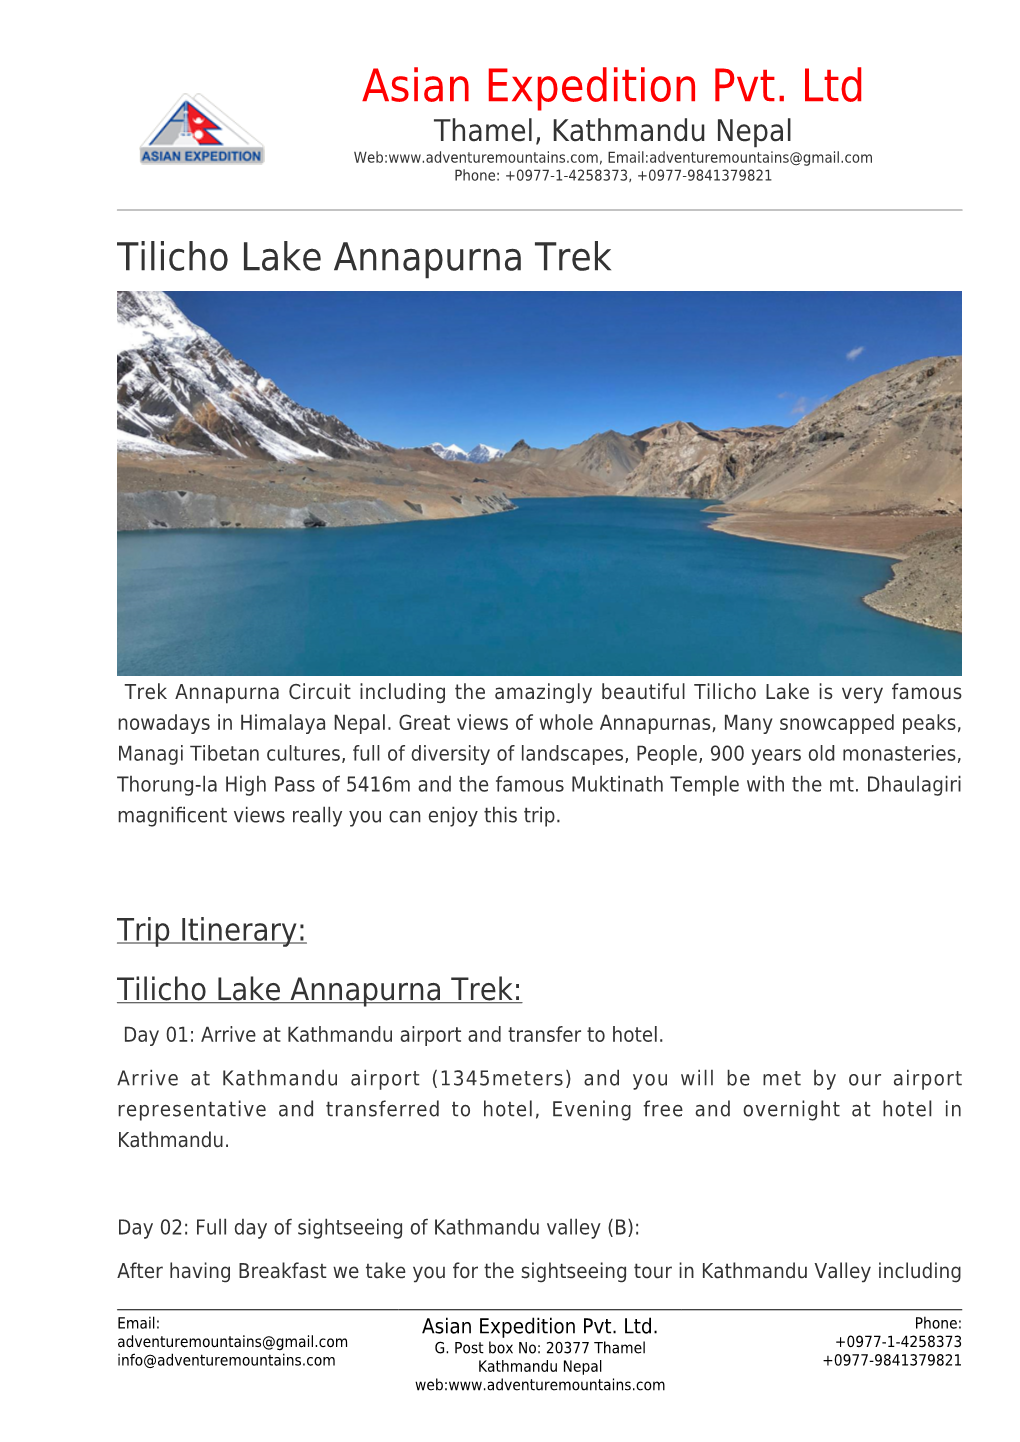 Tilicho Lake Annapurna Trek- Asian Expedition Pvt. Ltd